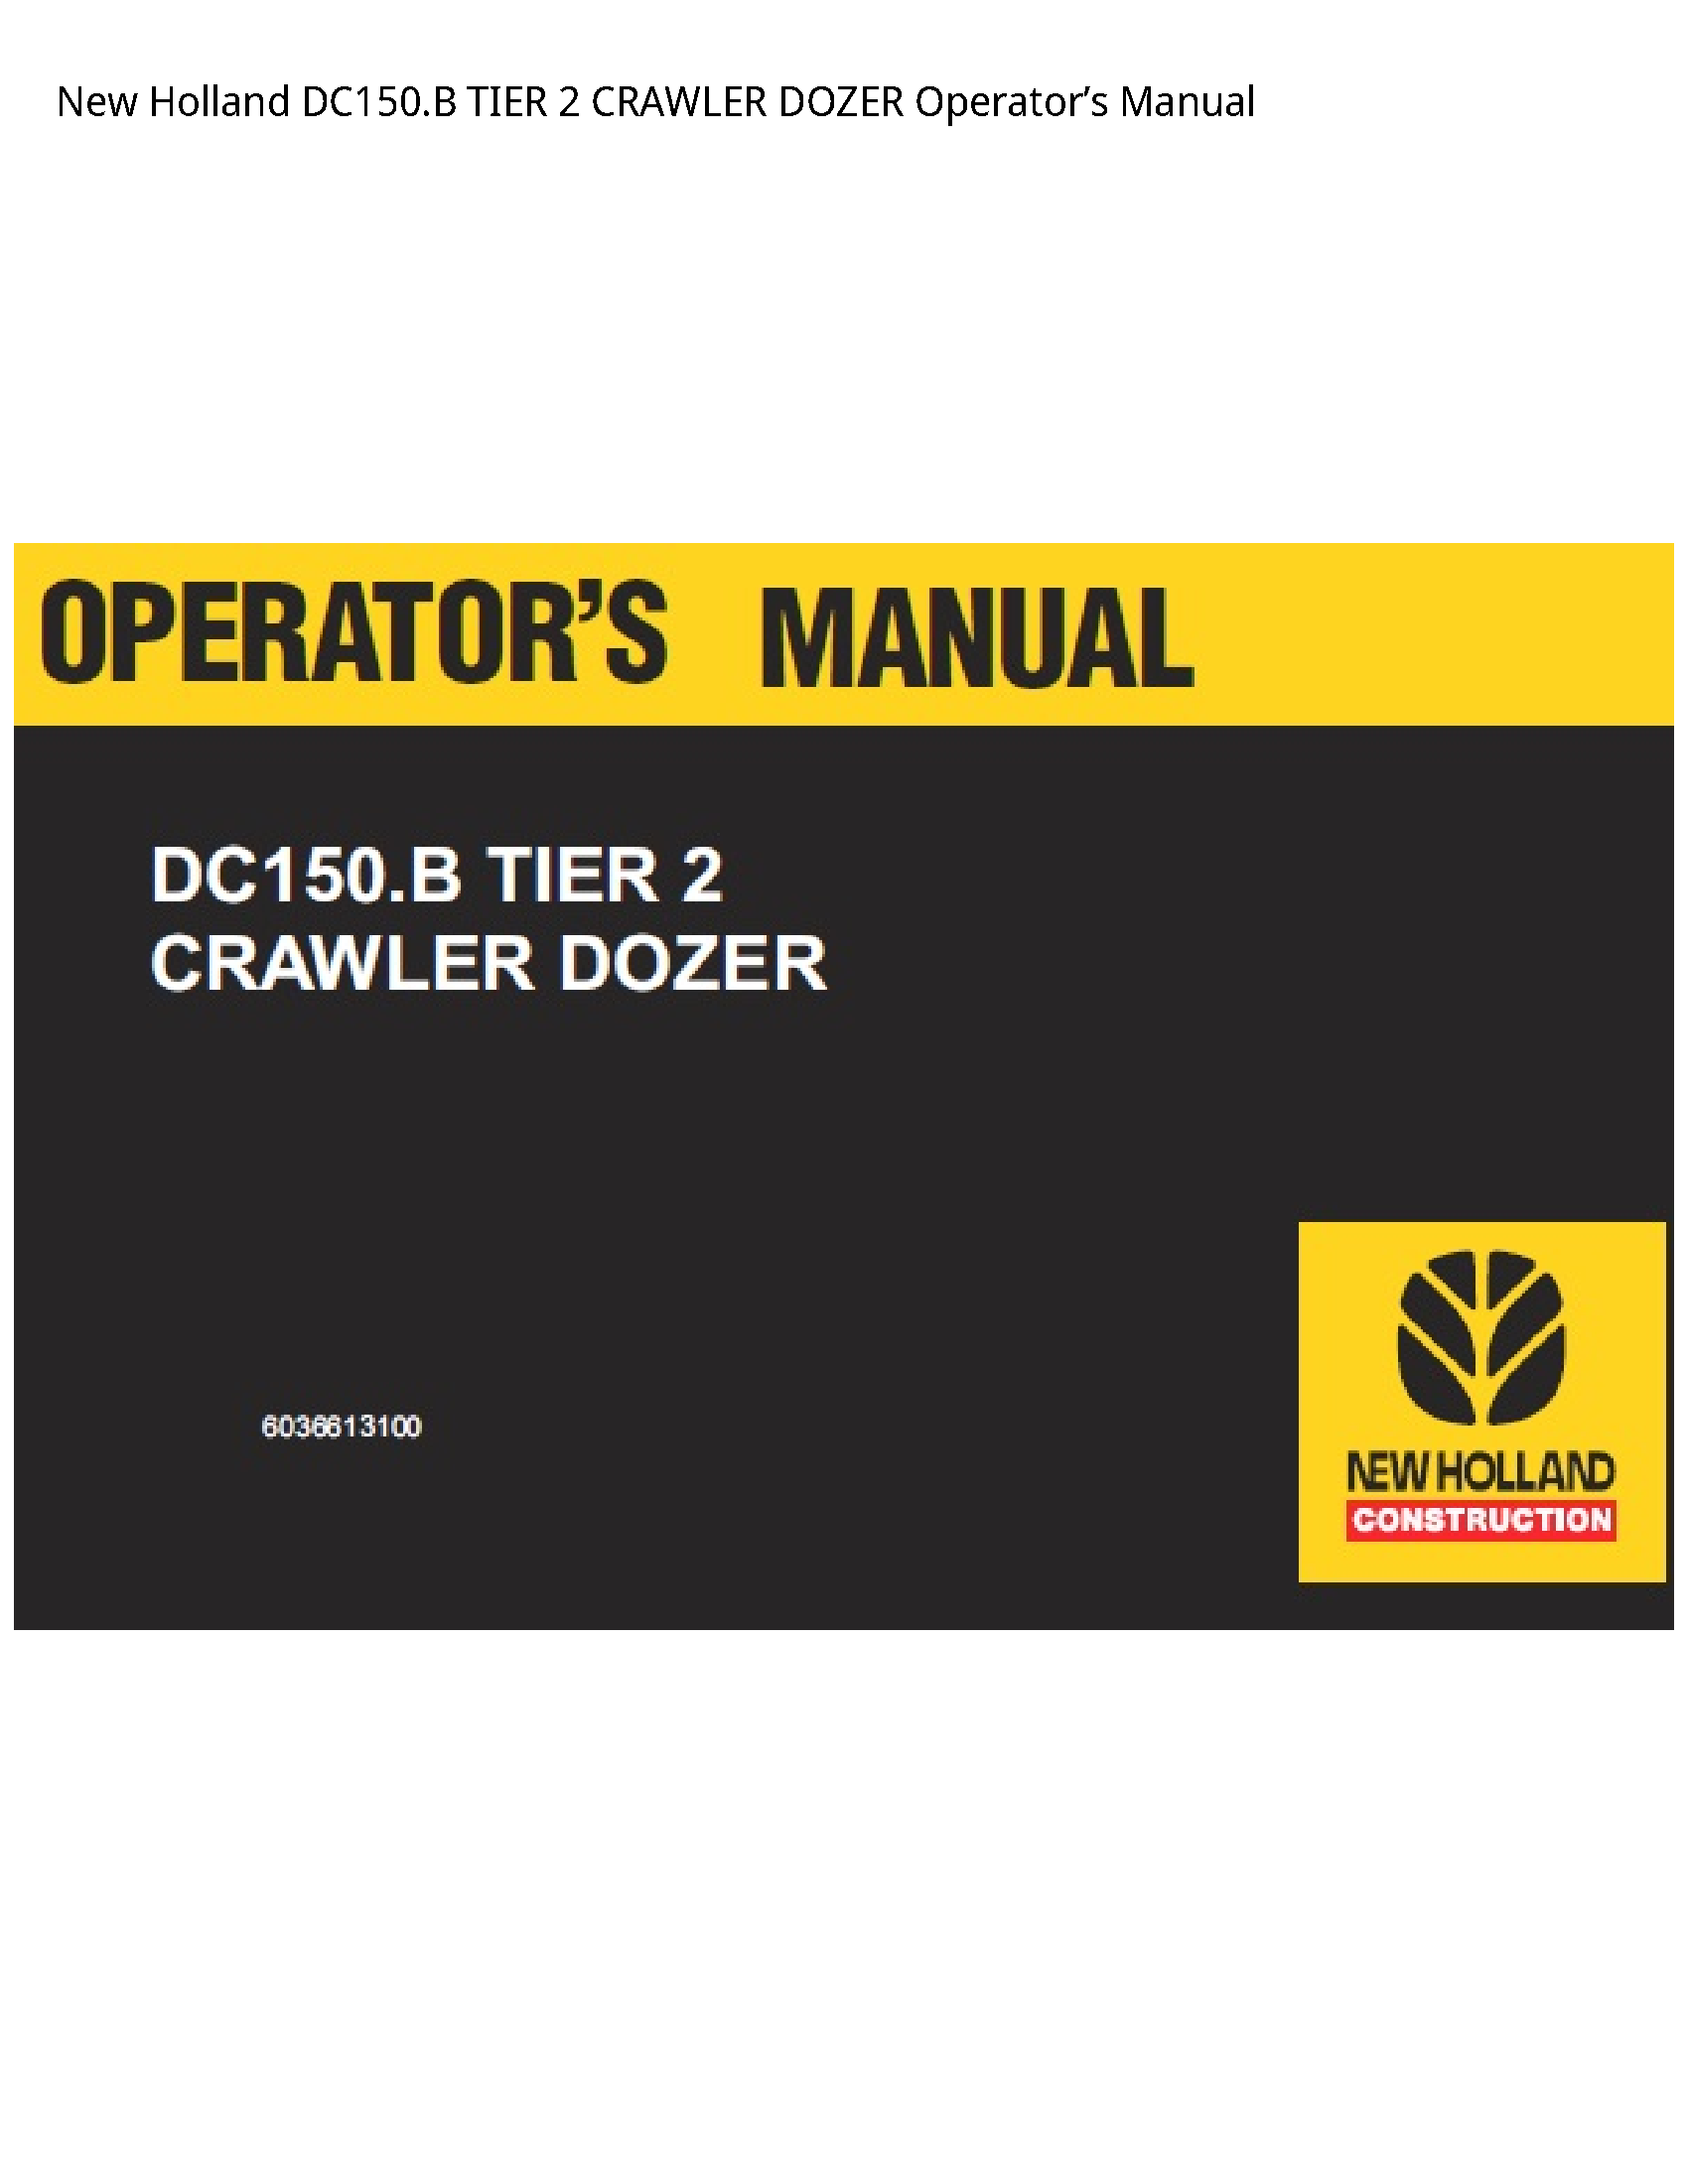 New Holland DC150.B TIER CRAWLER DOZER Operator’s manual